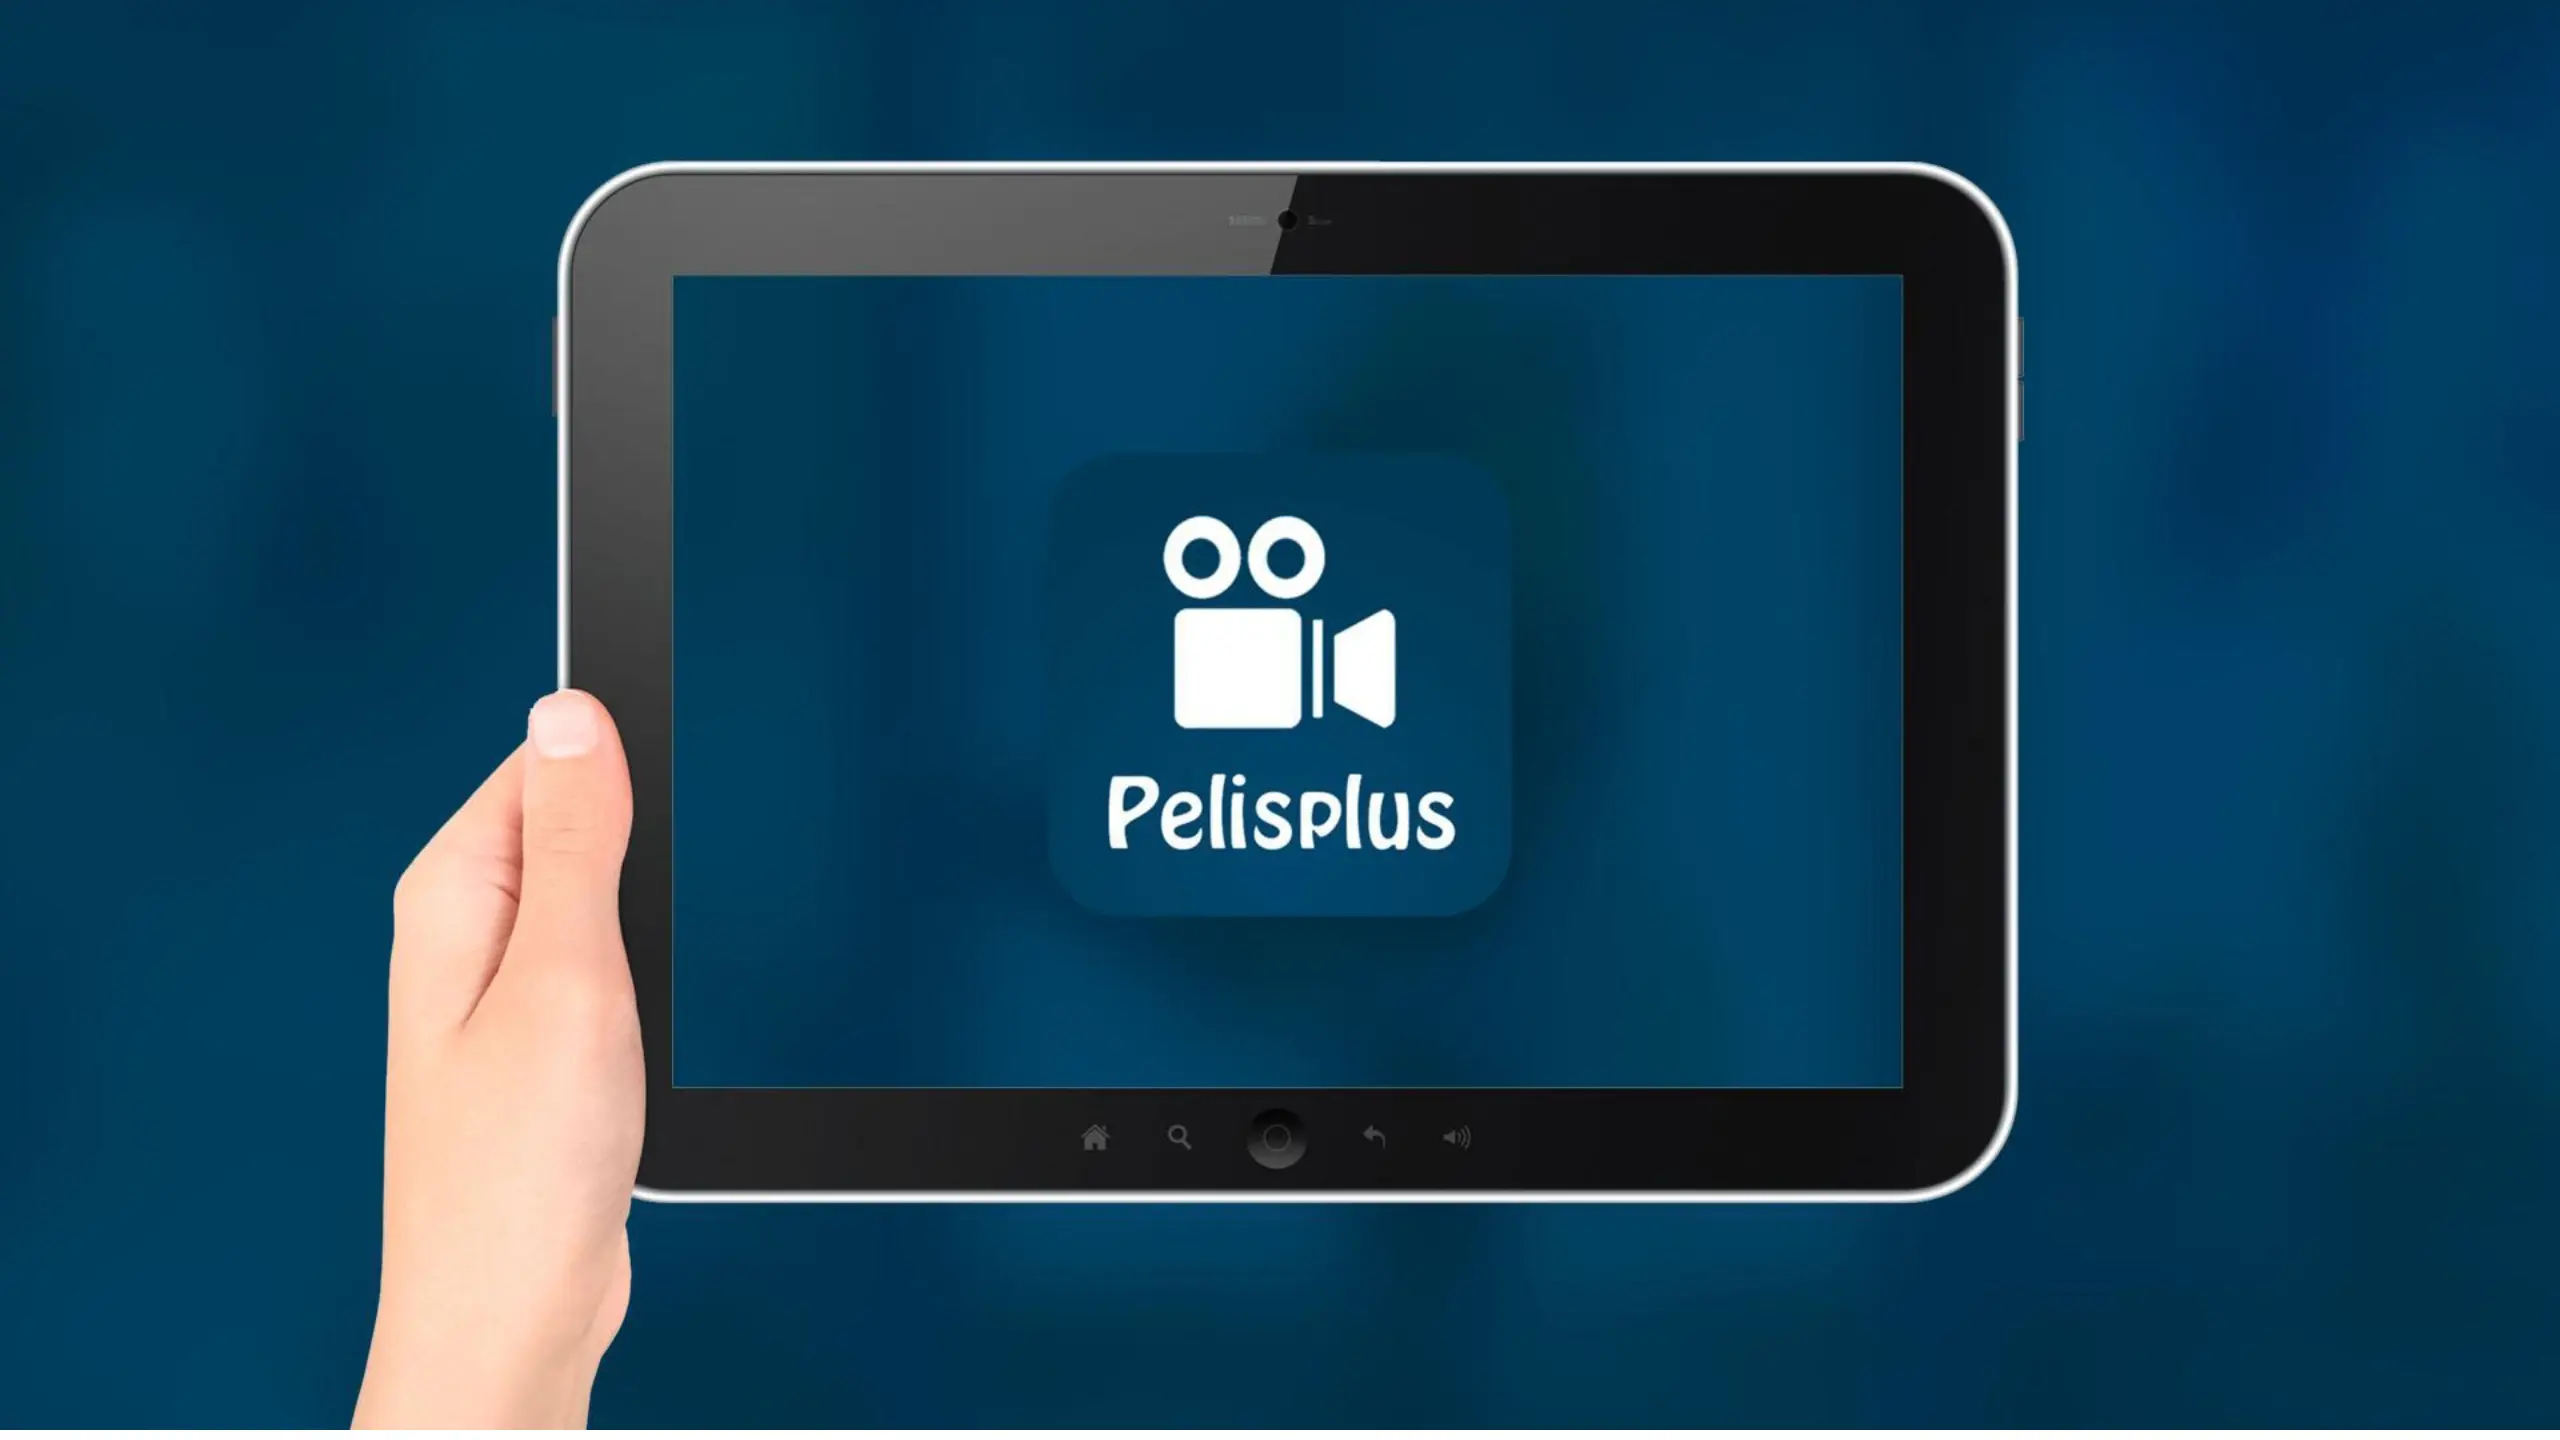 Pelisplus APK - Stream Your Favourite Movies and TV Shows